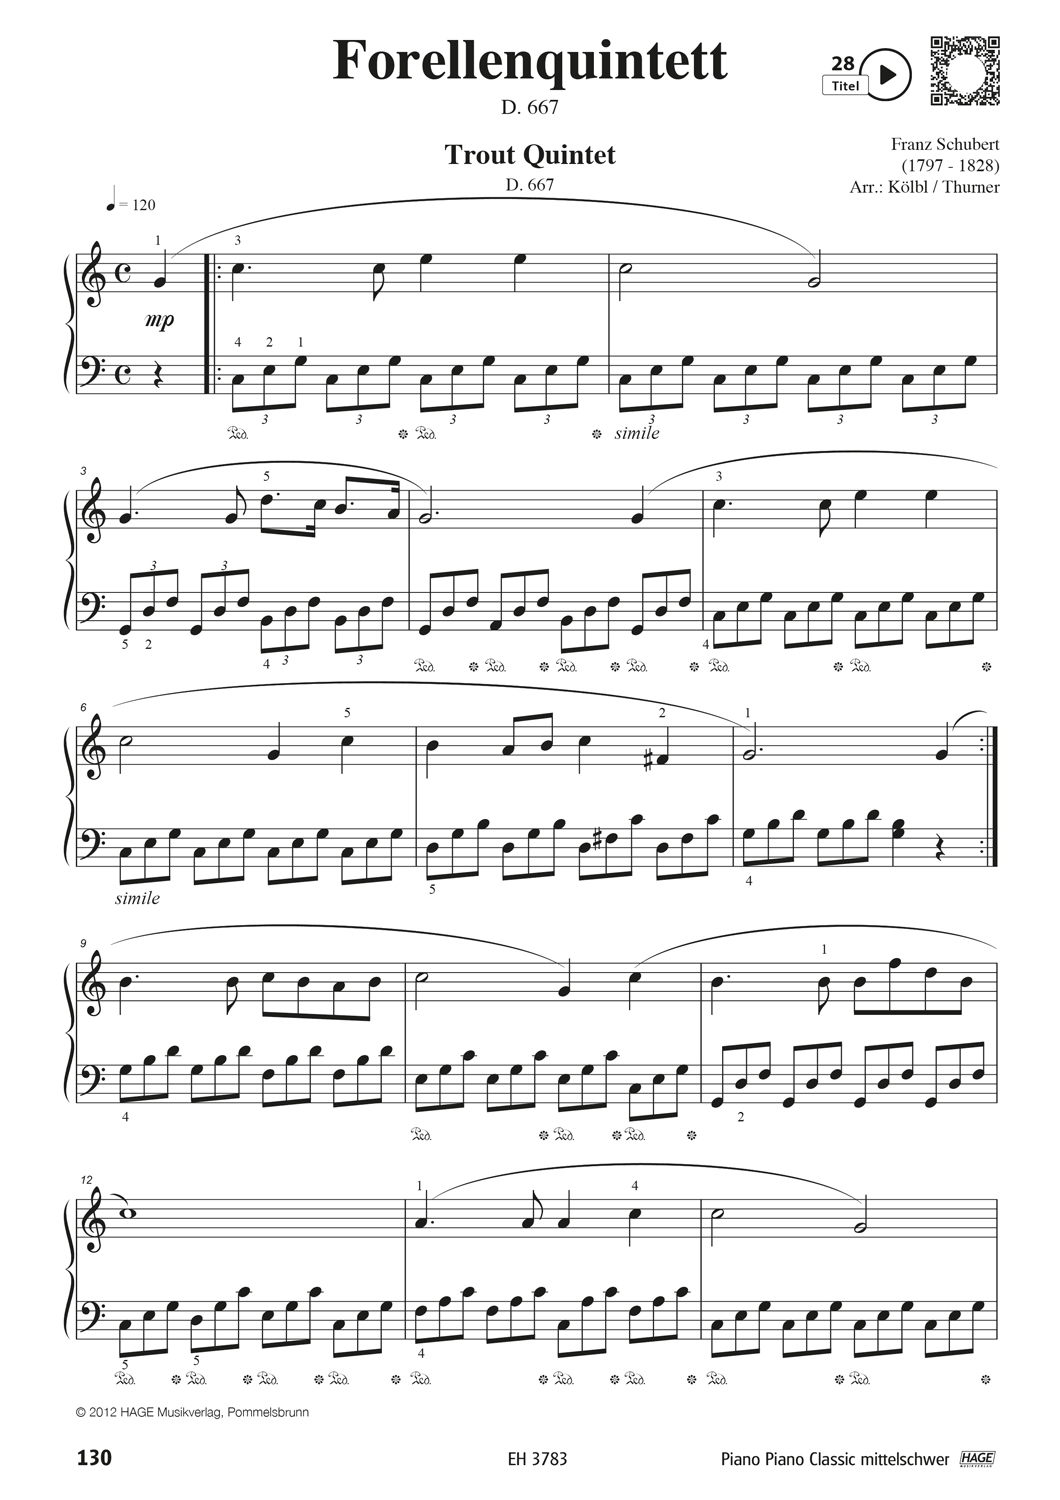 Piano Piano Classic mittelschwer Seiten 9